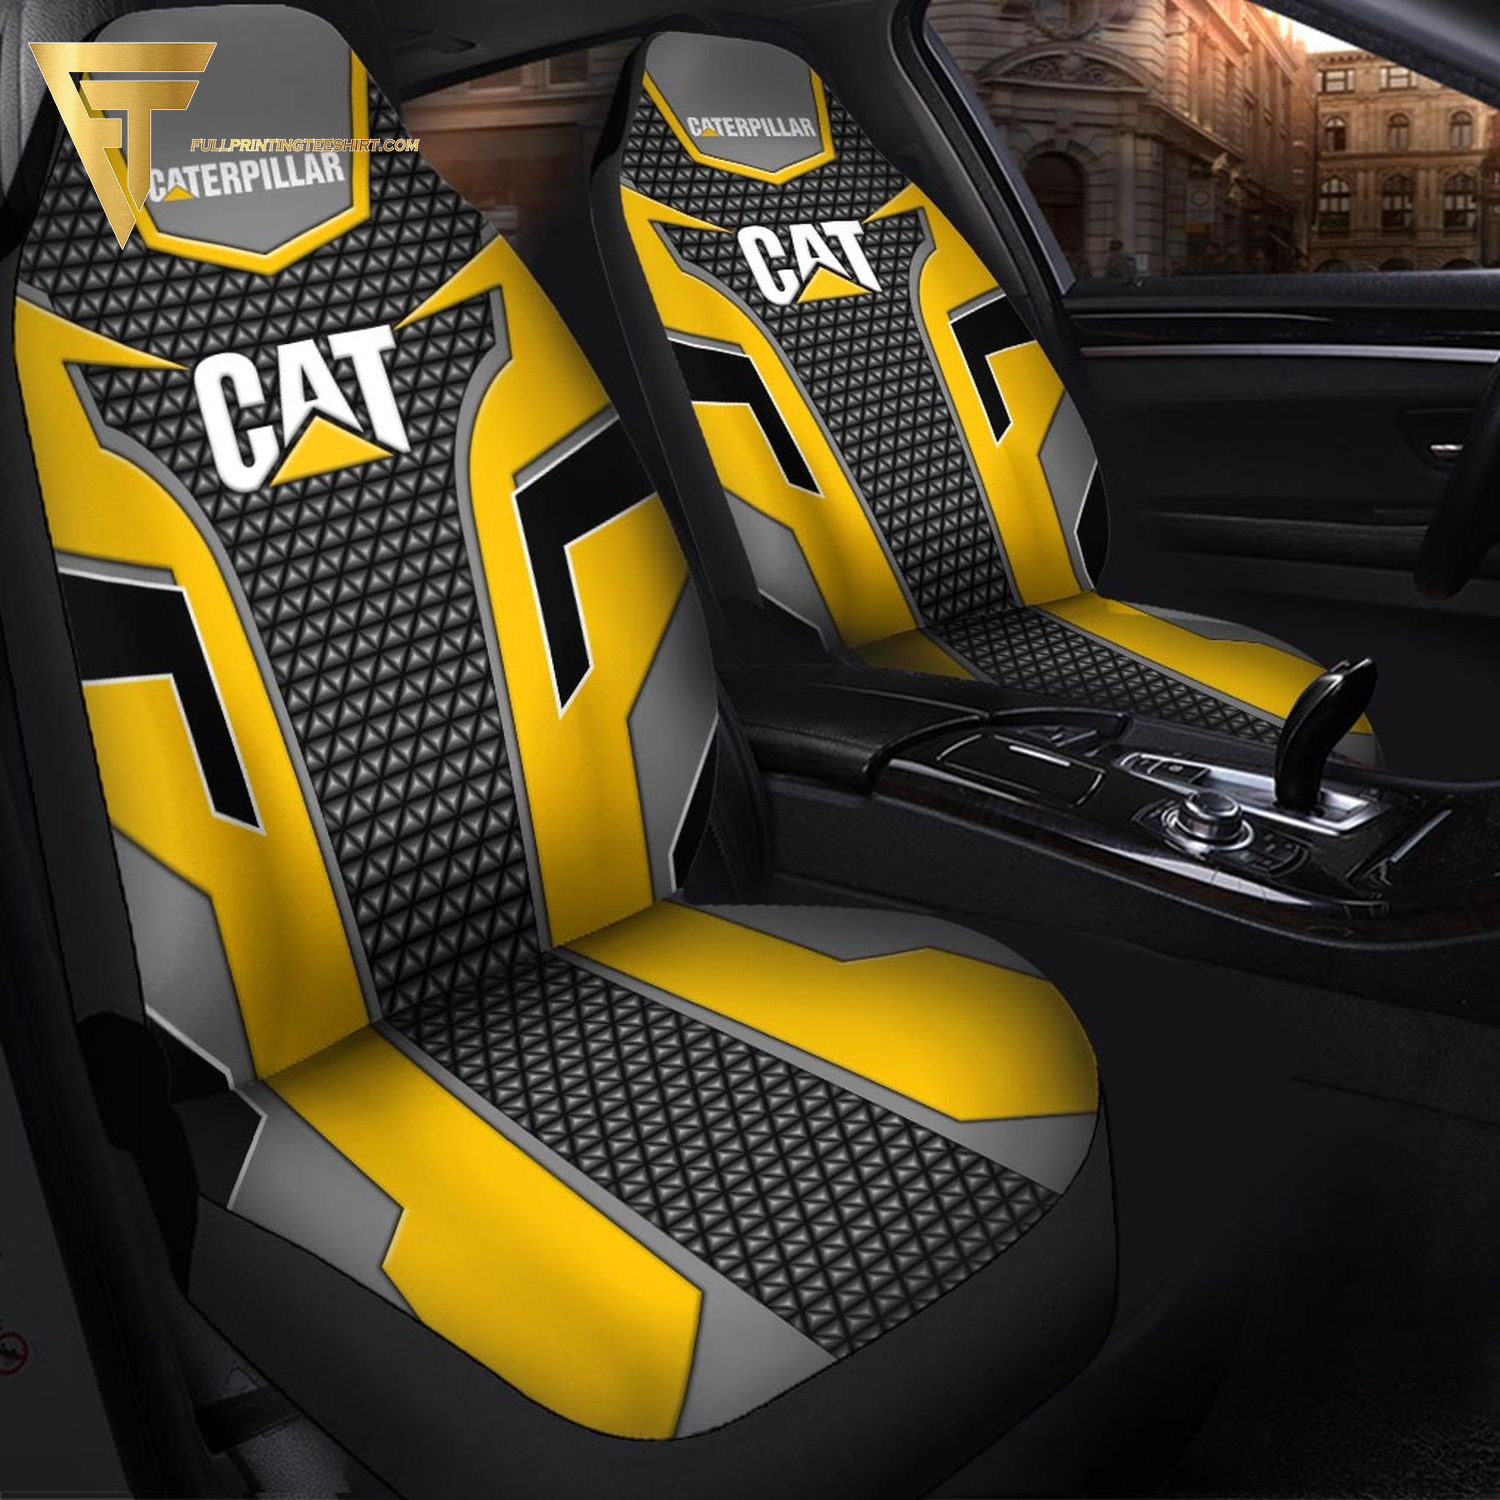 Caterpillar Company Symbol Car Seat